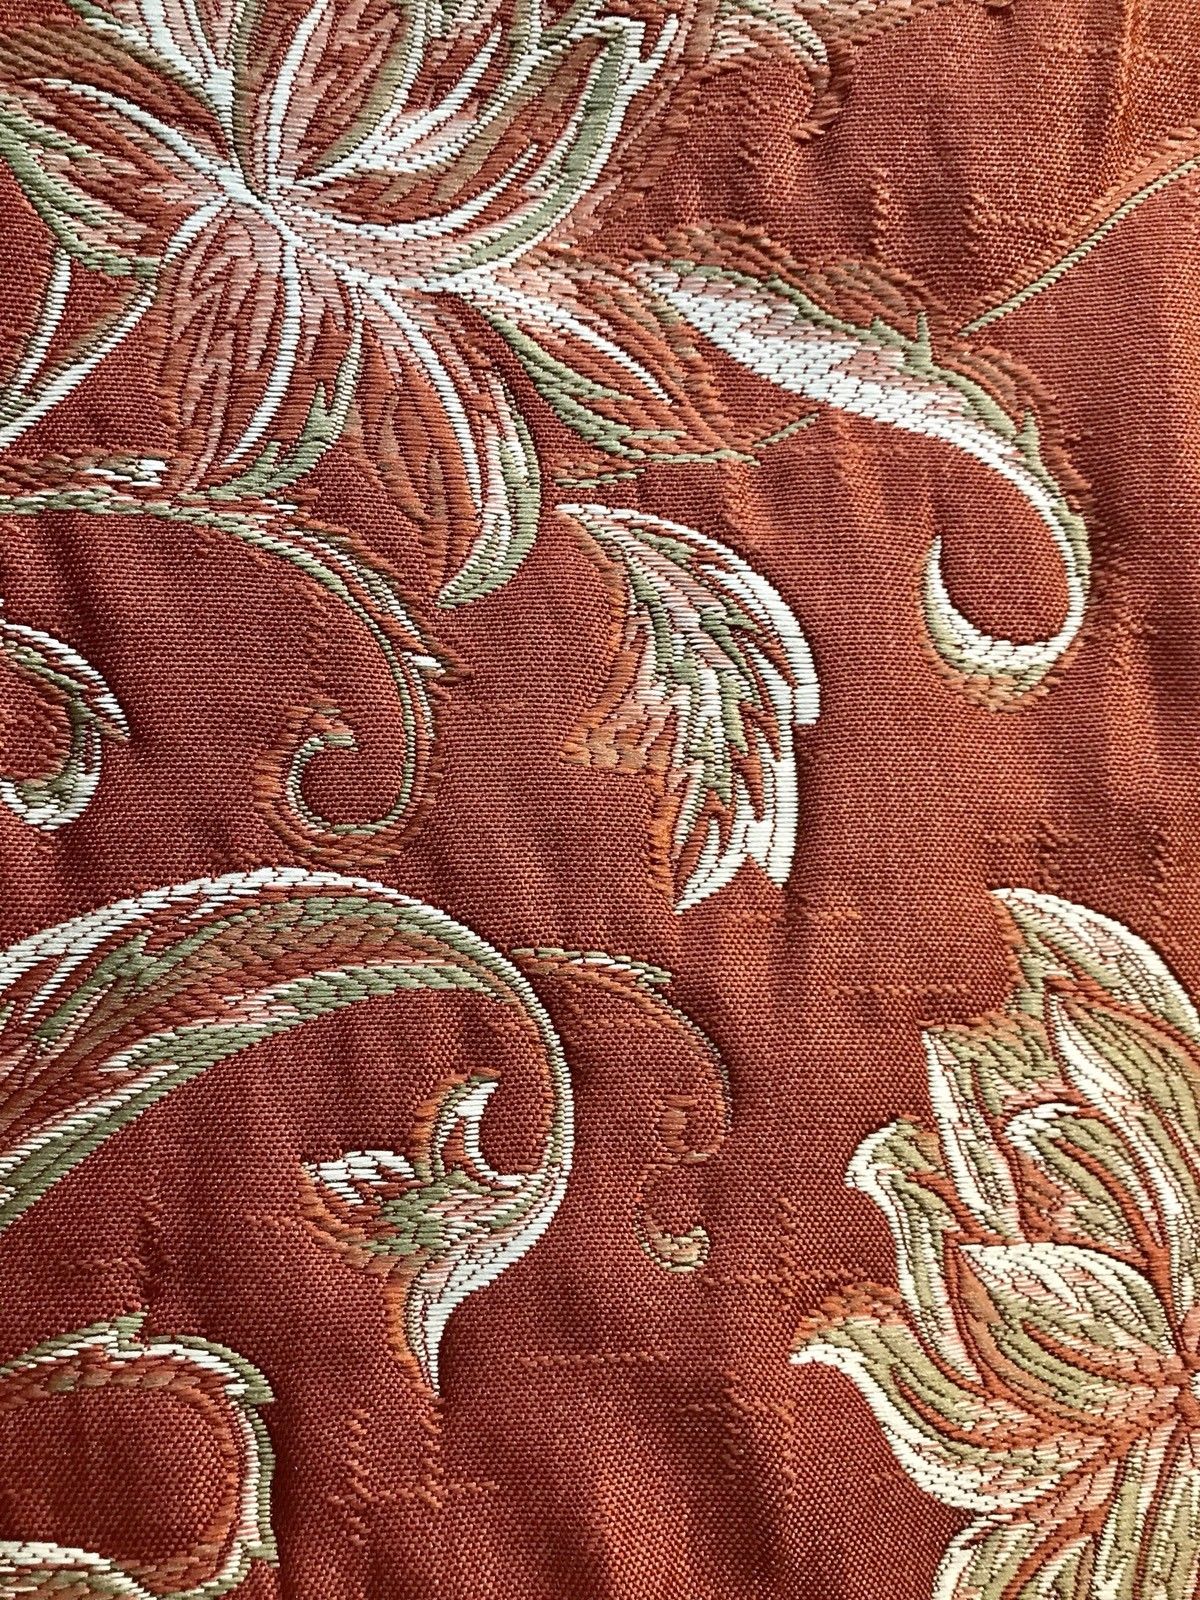 1/4 Quarter Yard Precut Fabric, Starburst Brick Red Rust Gold Mum Flower  Burst Fabric, 100% Cotton, Emma & Mila Fabrics 